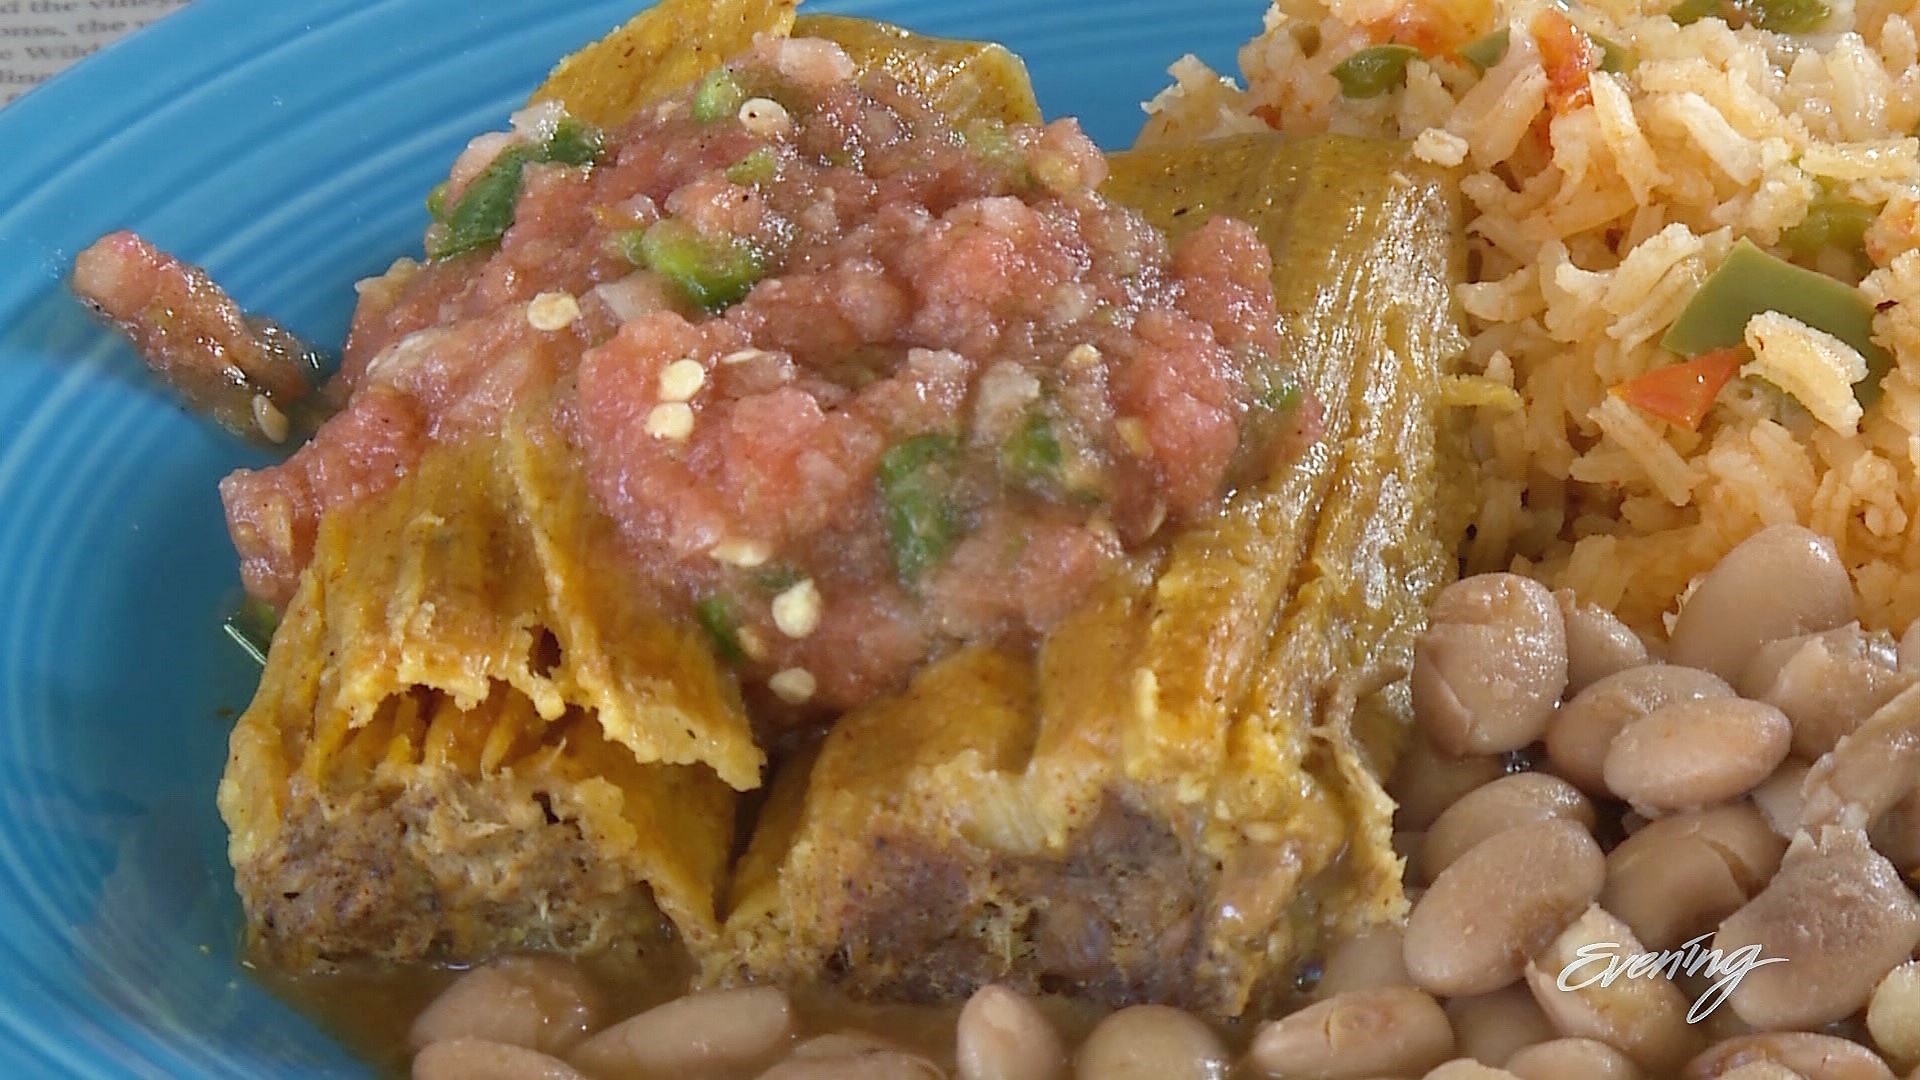 Owner-chef Felipe Hernandez makes the Northwest's best tamales and embodies the American dream.